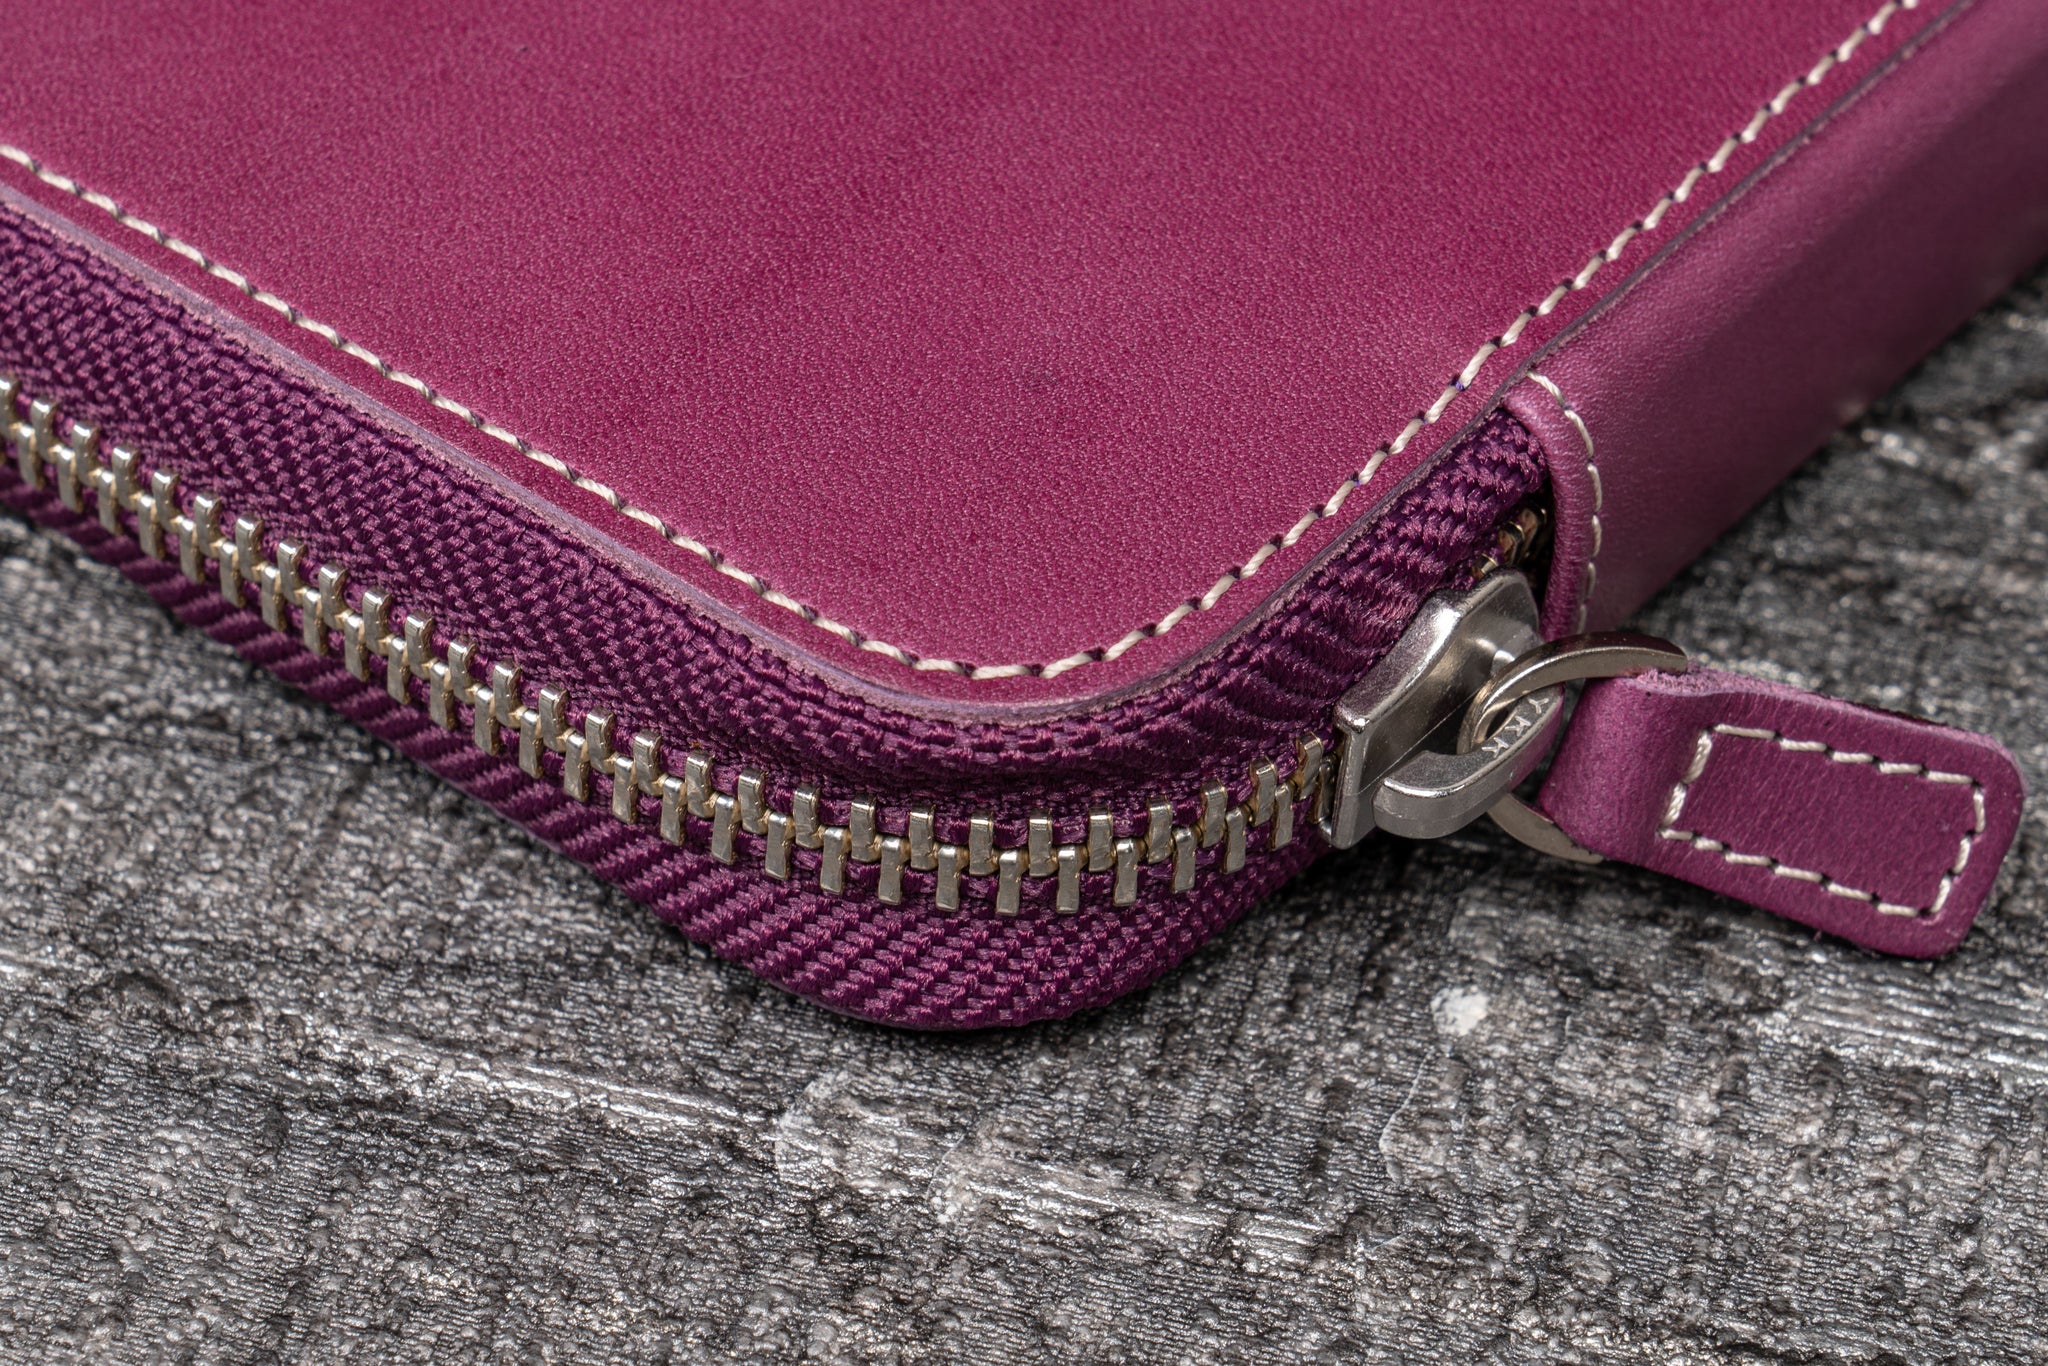 Galen Leather 3 Pen Zipper Case - Purple